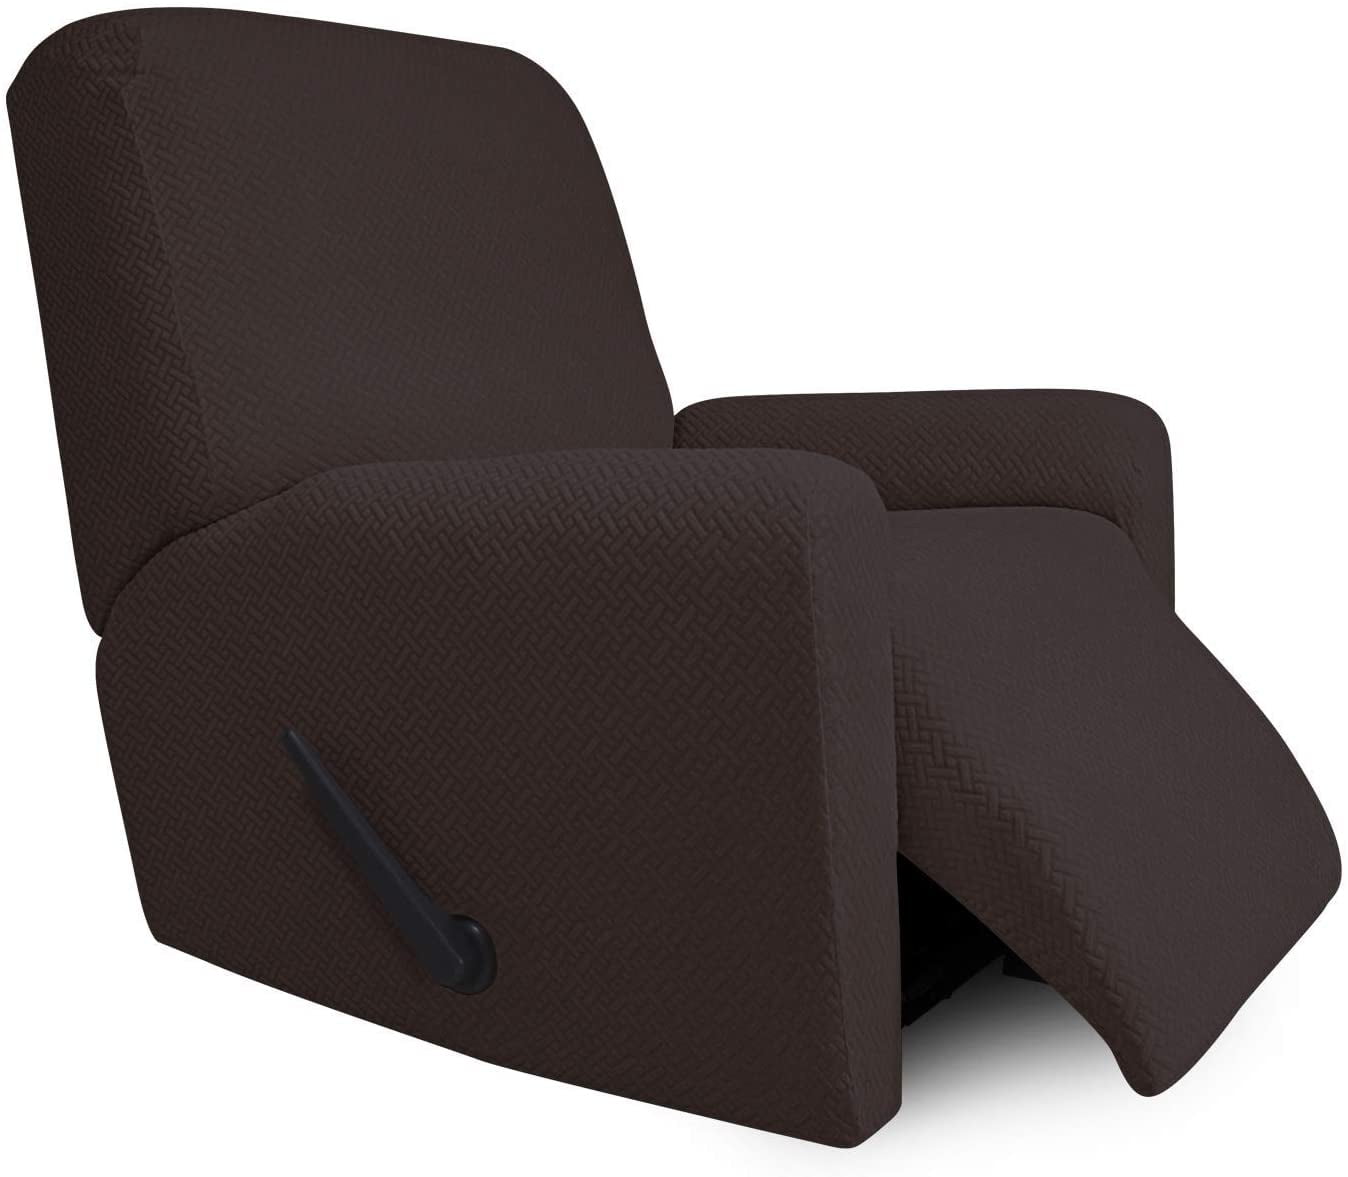 4pcs/set Stretch Recliner Sofa Slipcover Durable Soft High Jacquard Chair Cover 